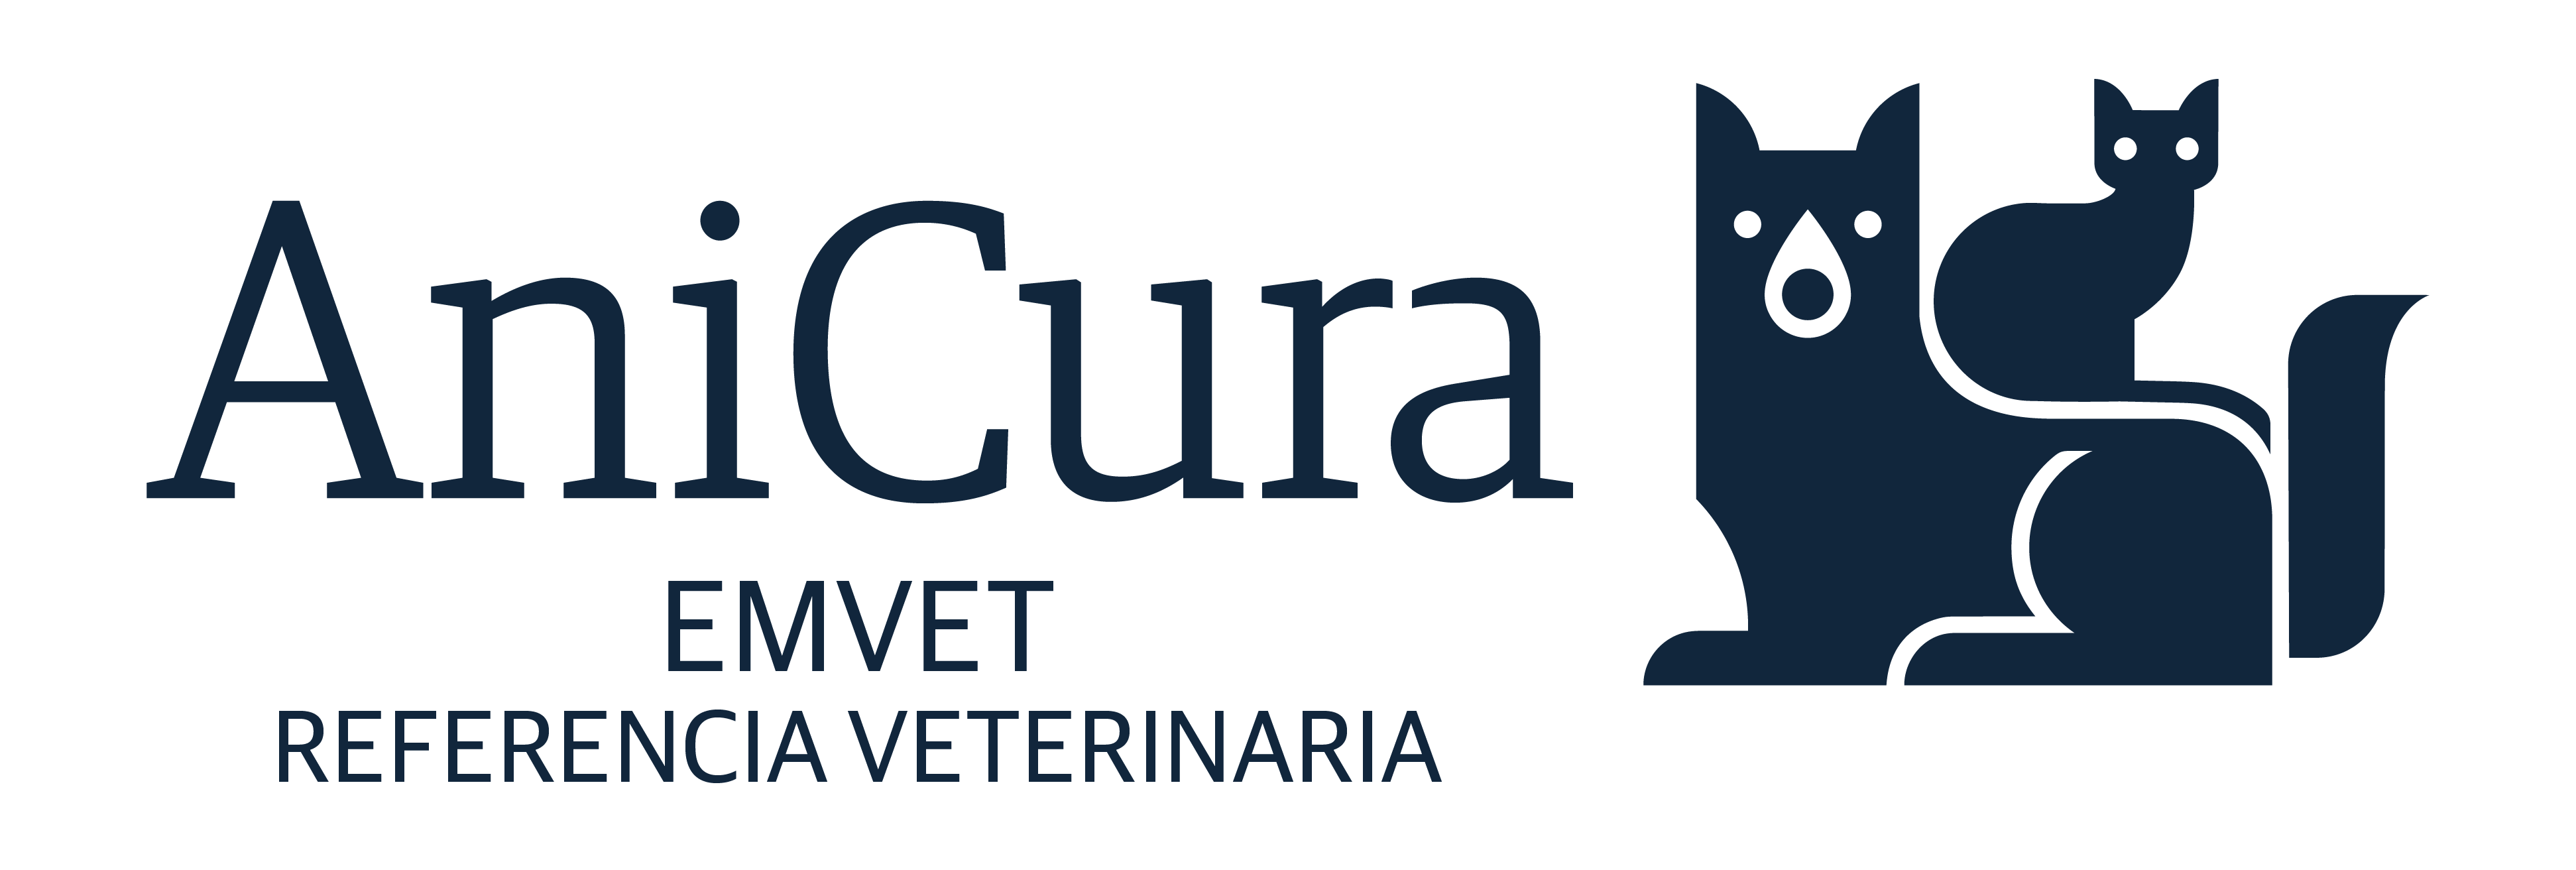 AniCura EmVet Referencia Veterinaria logo